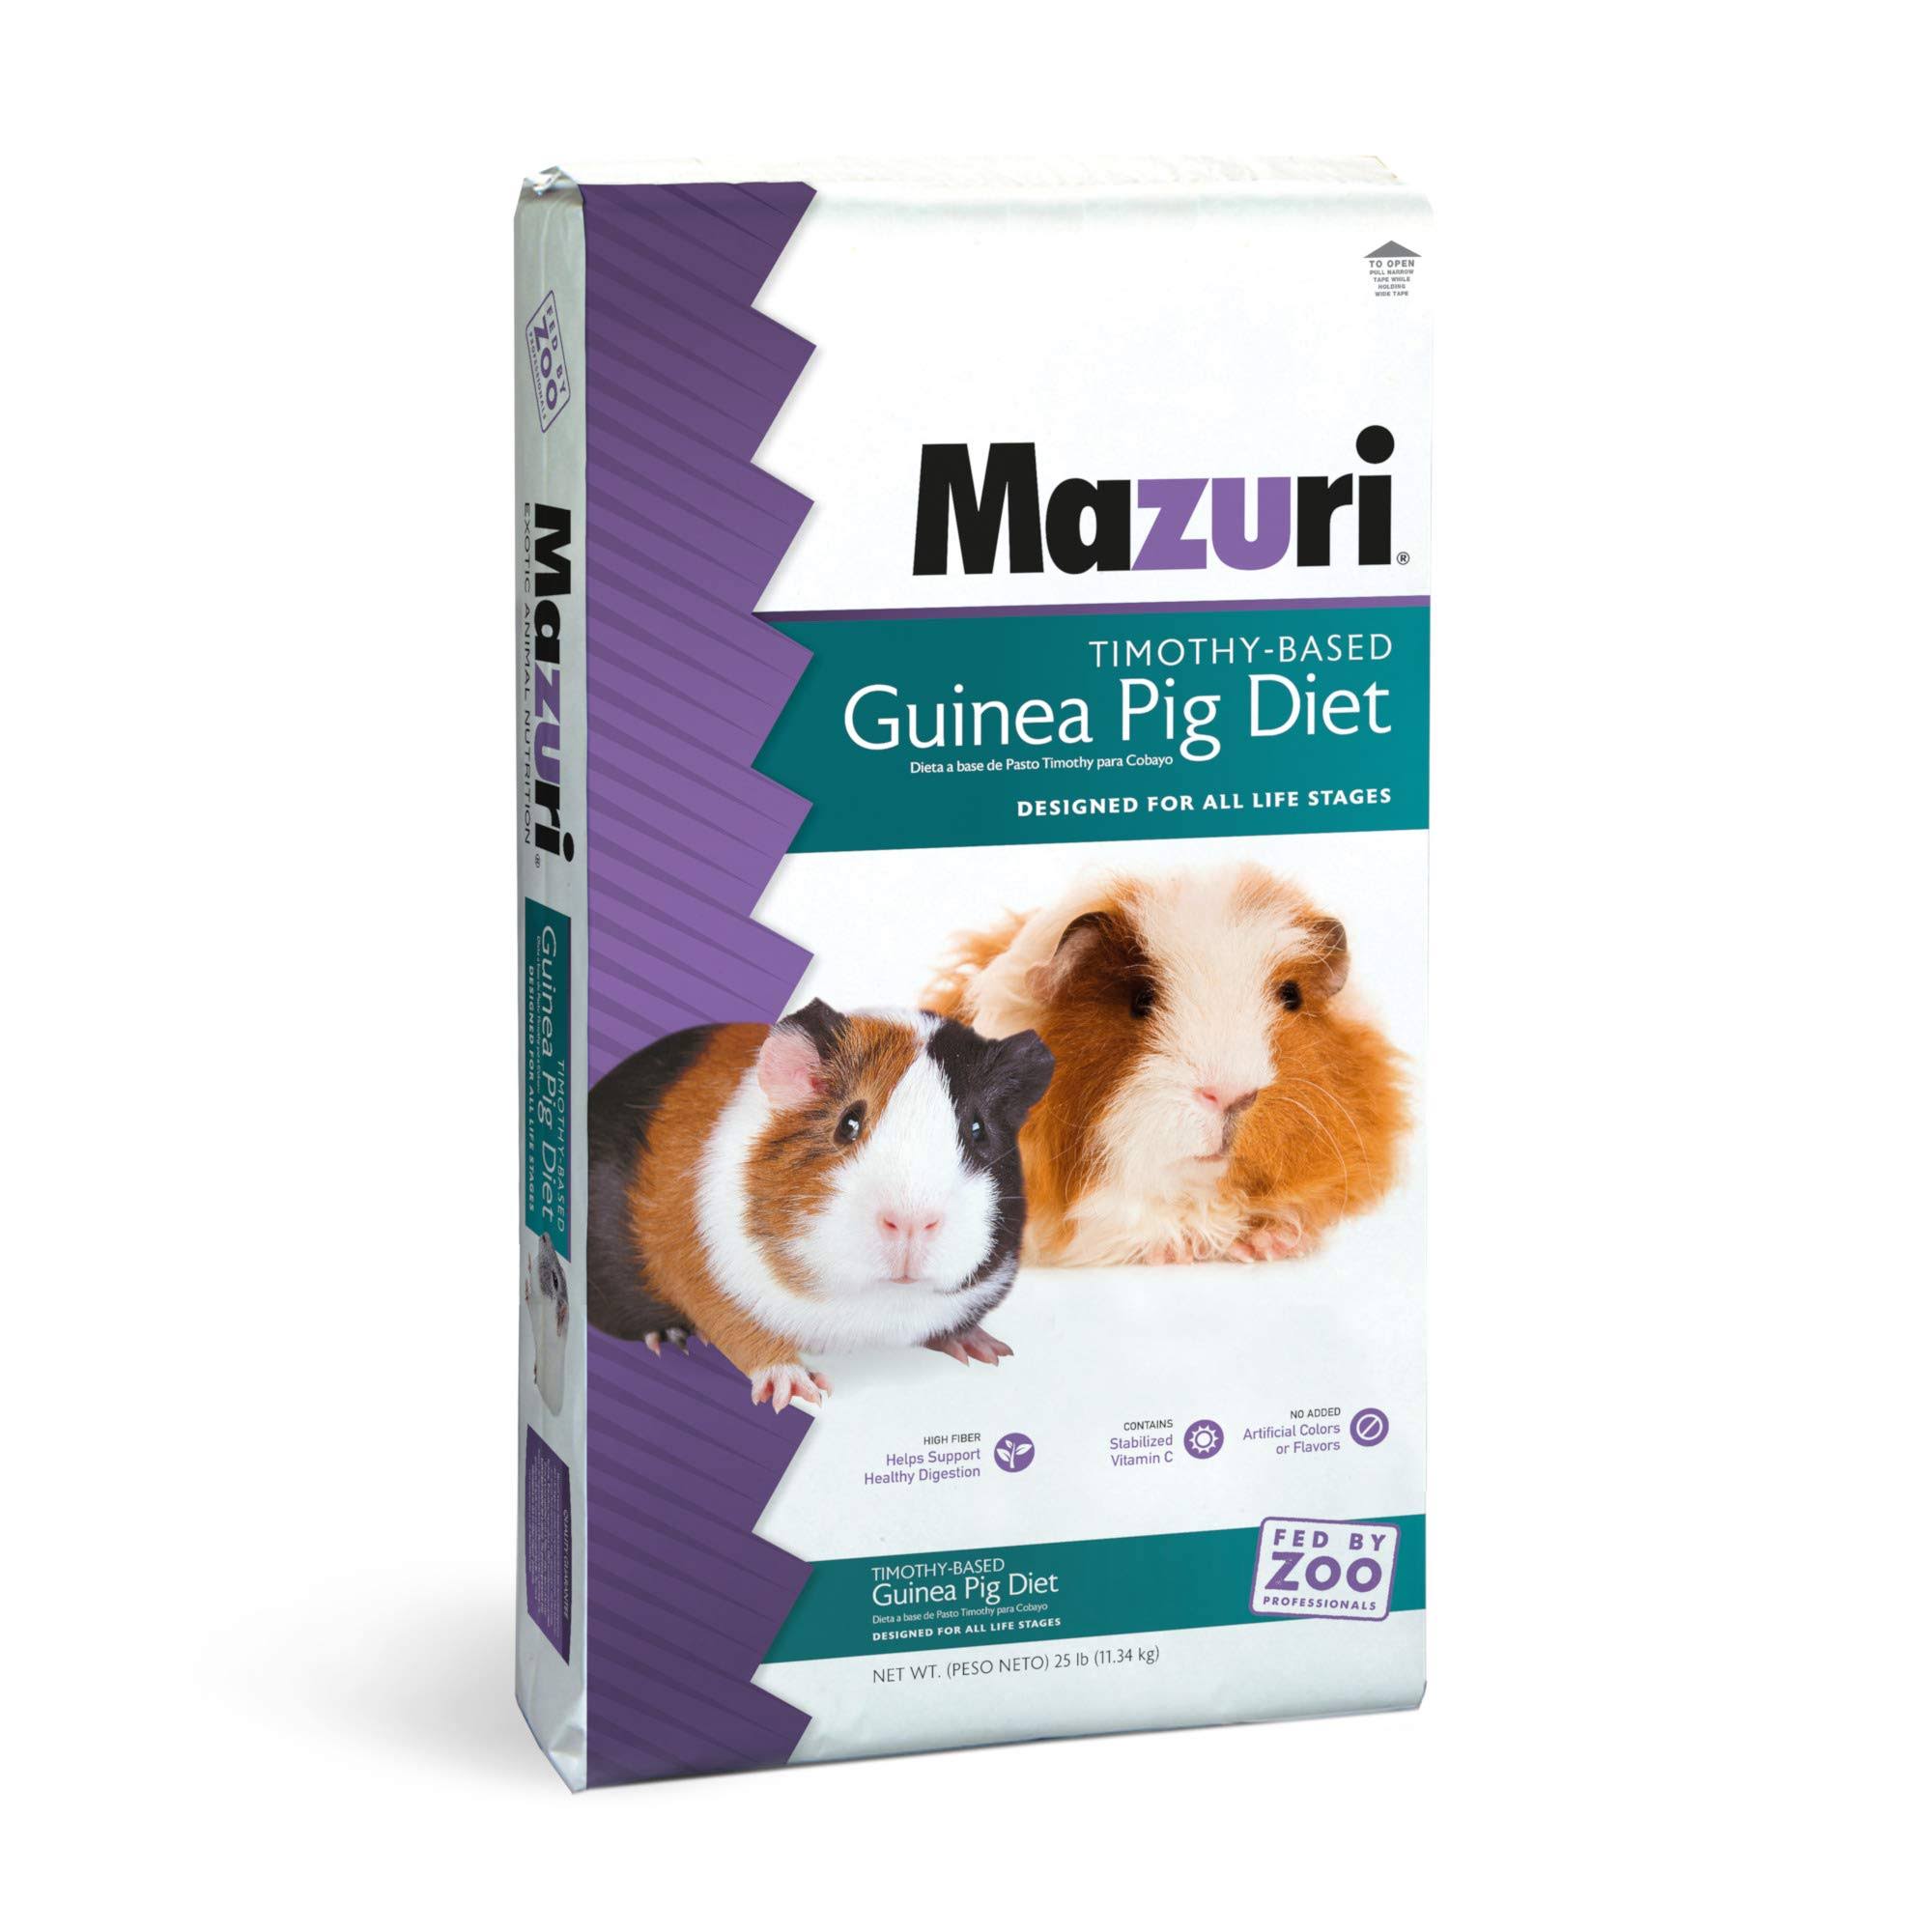 Pmi Nutrition Mazuri Guinea Pig Food - 25lbs